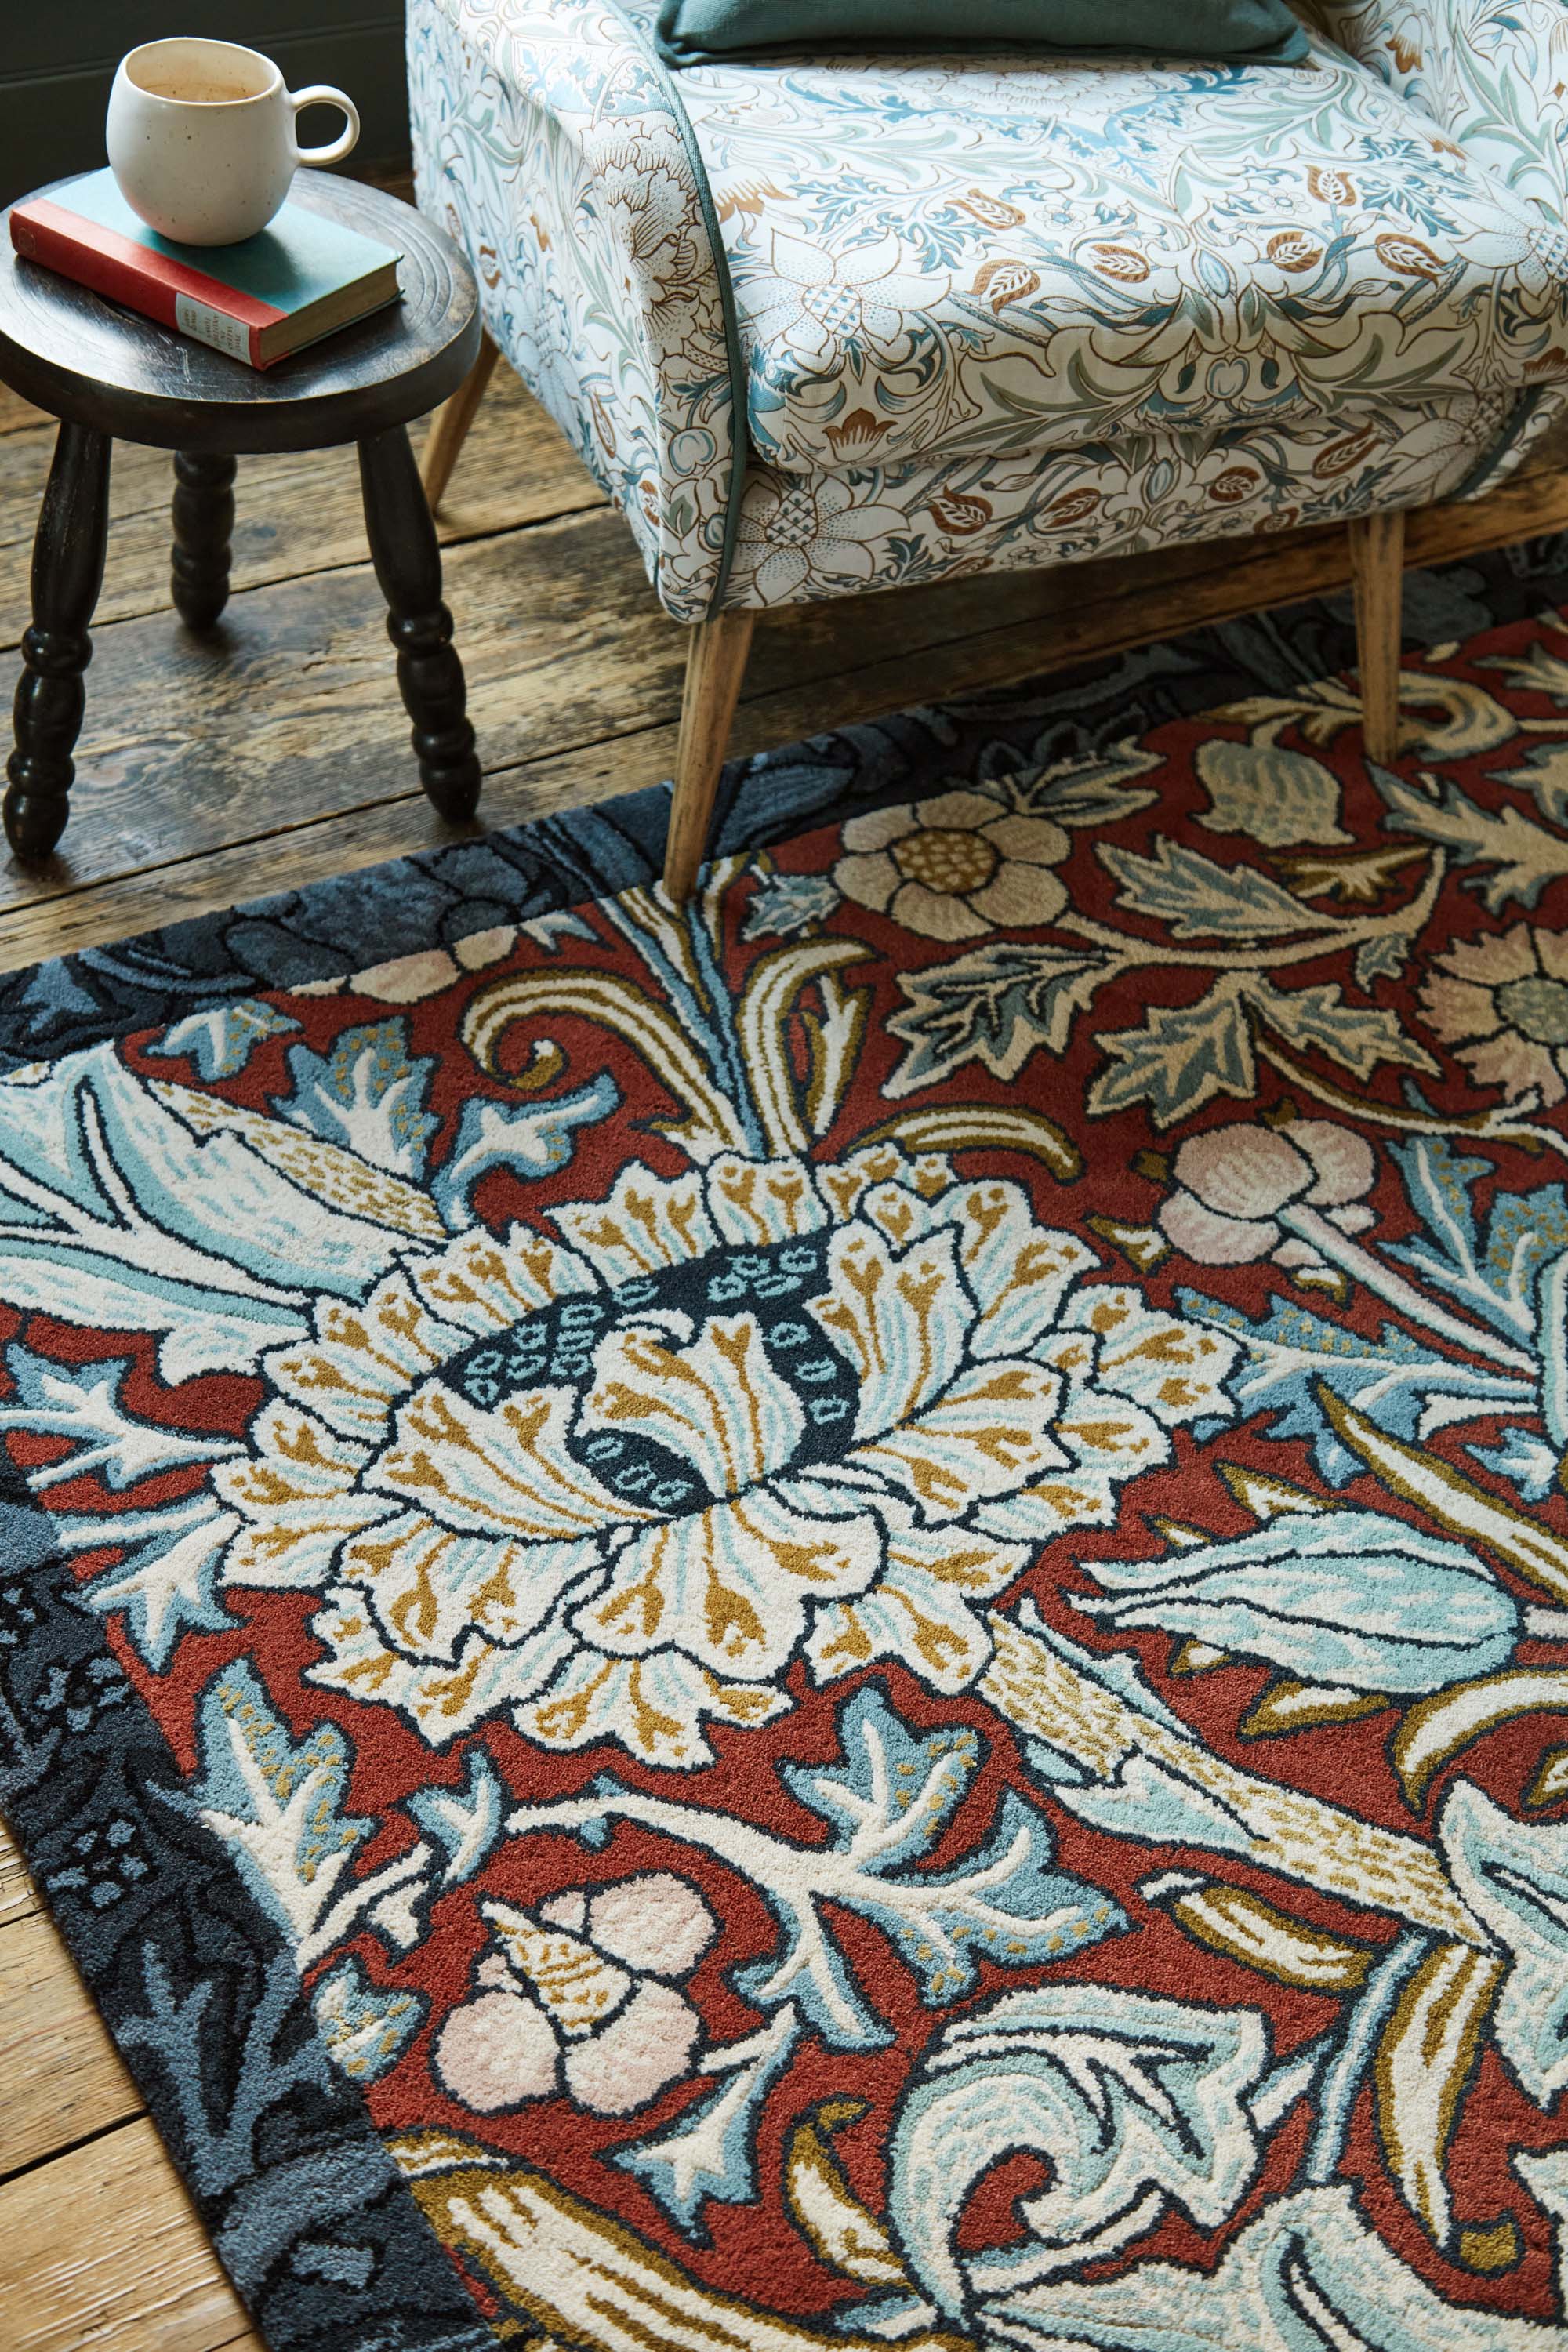 Multicolour floral bordered rug